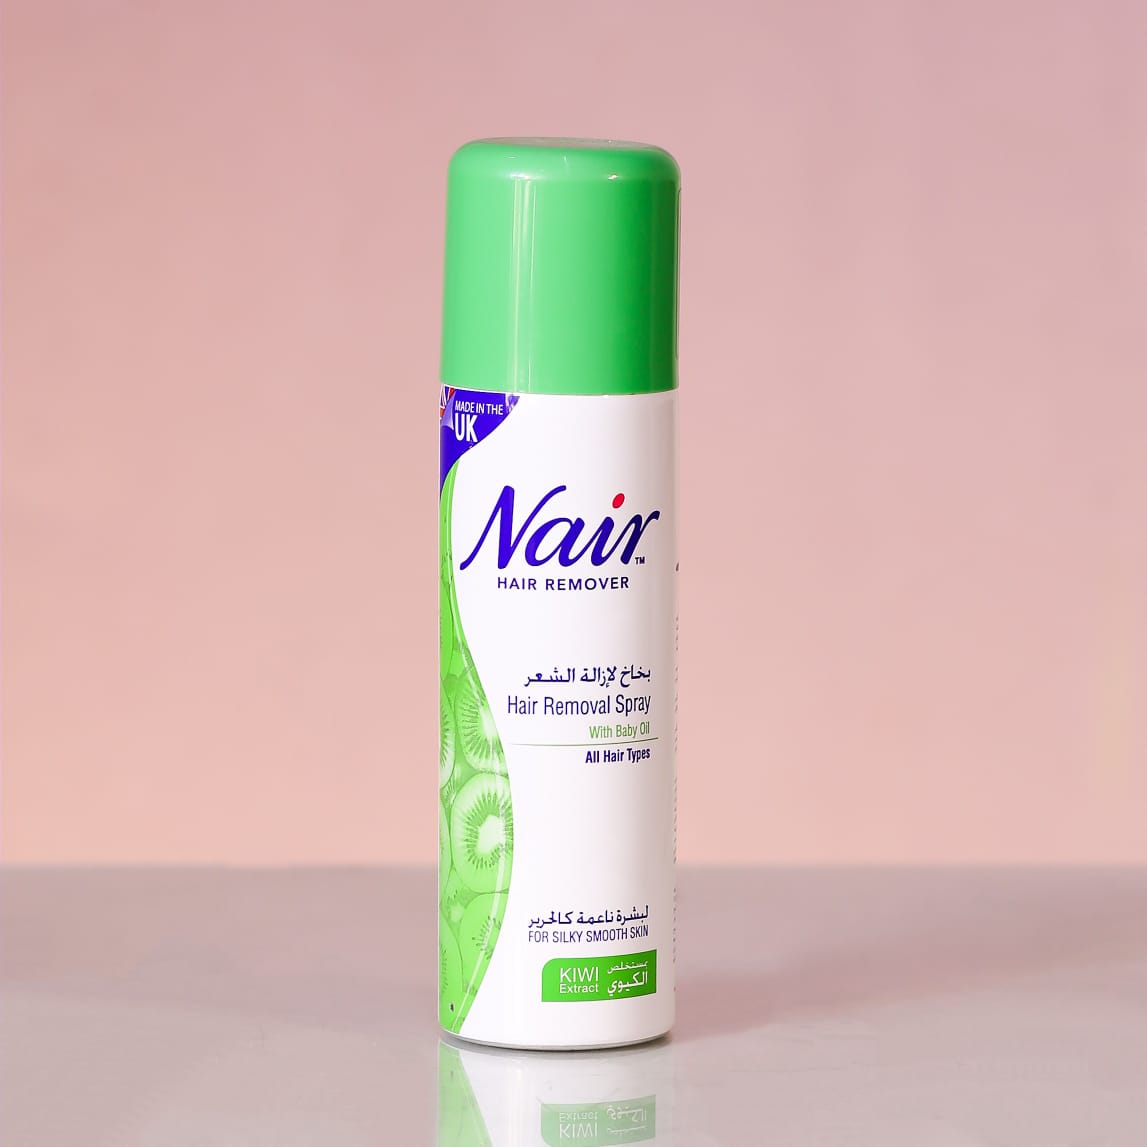 Nair Hair Removing Spray Kiwi Extract (200ml) – 